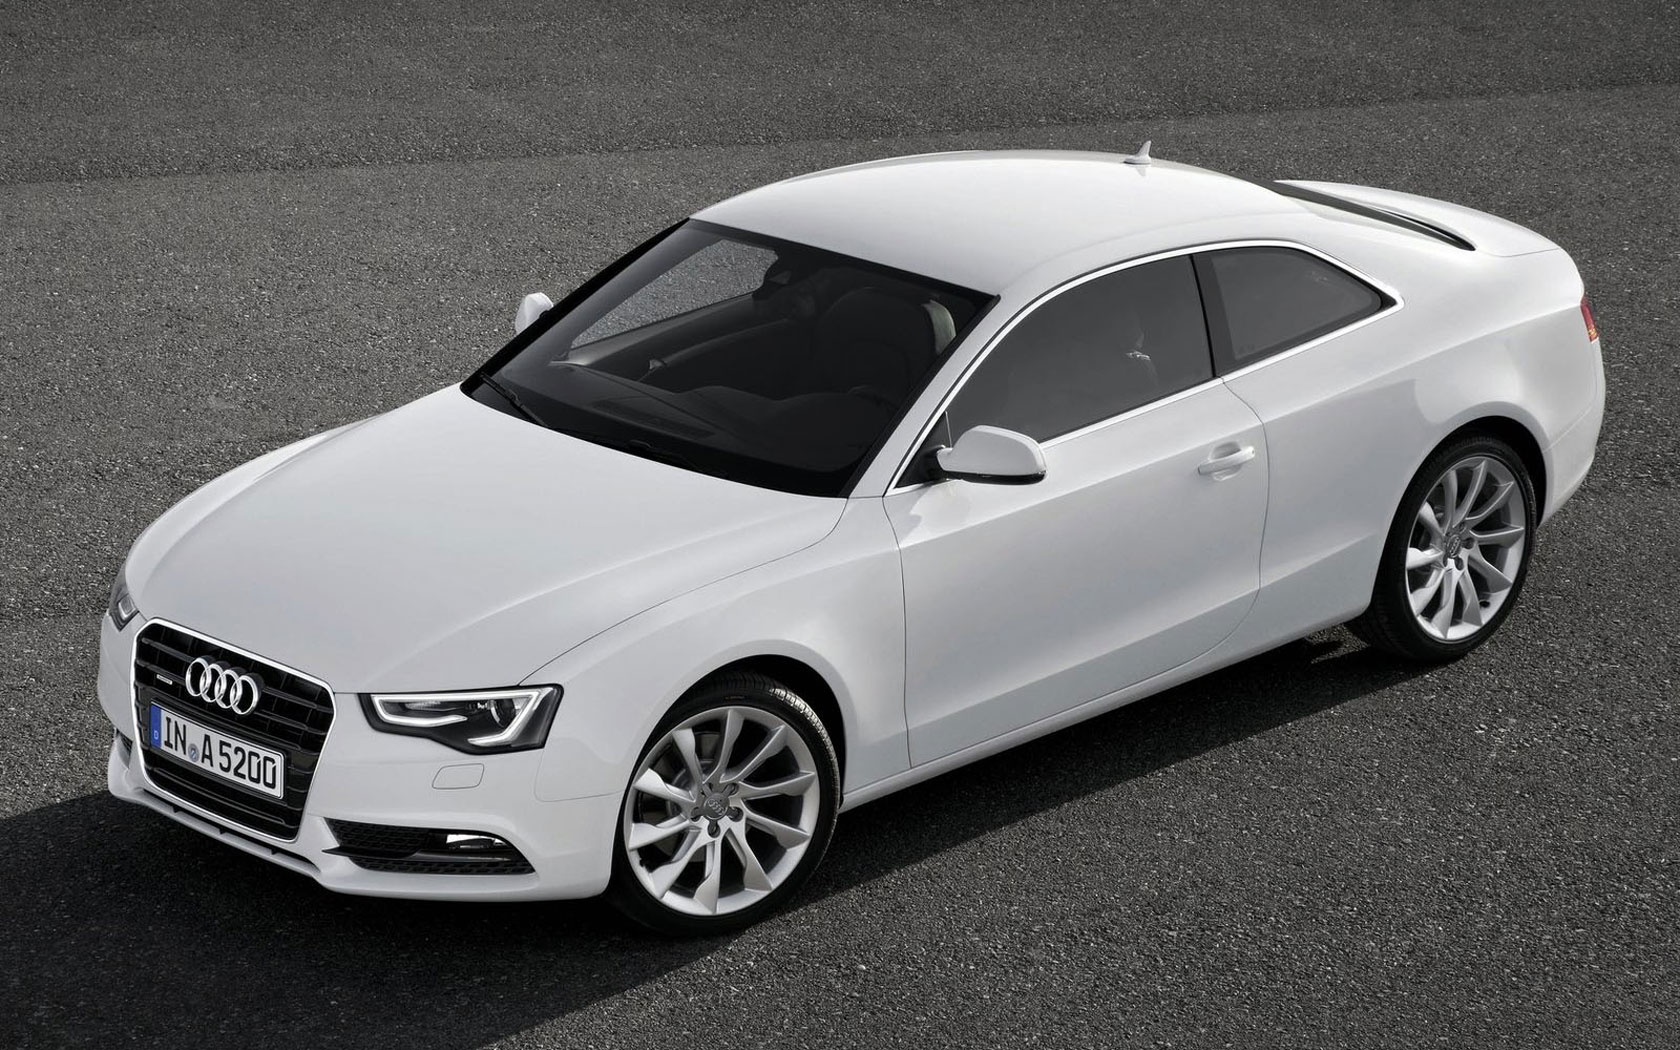  Audi A5 (2011-2016)